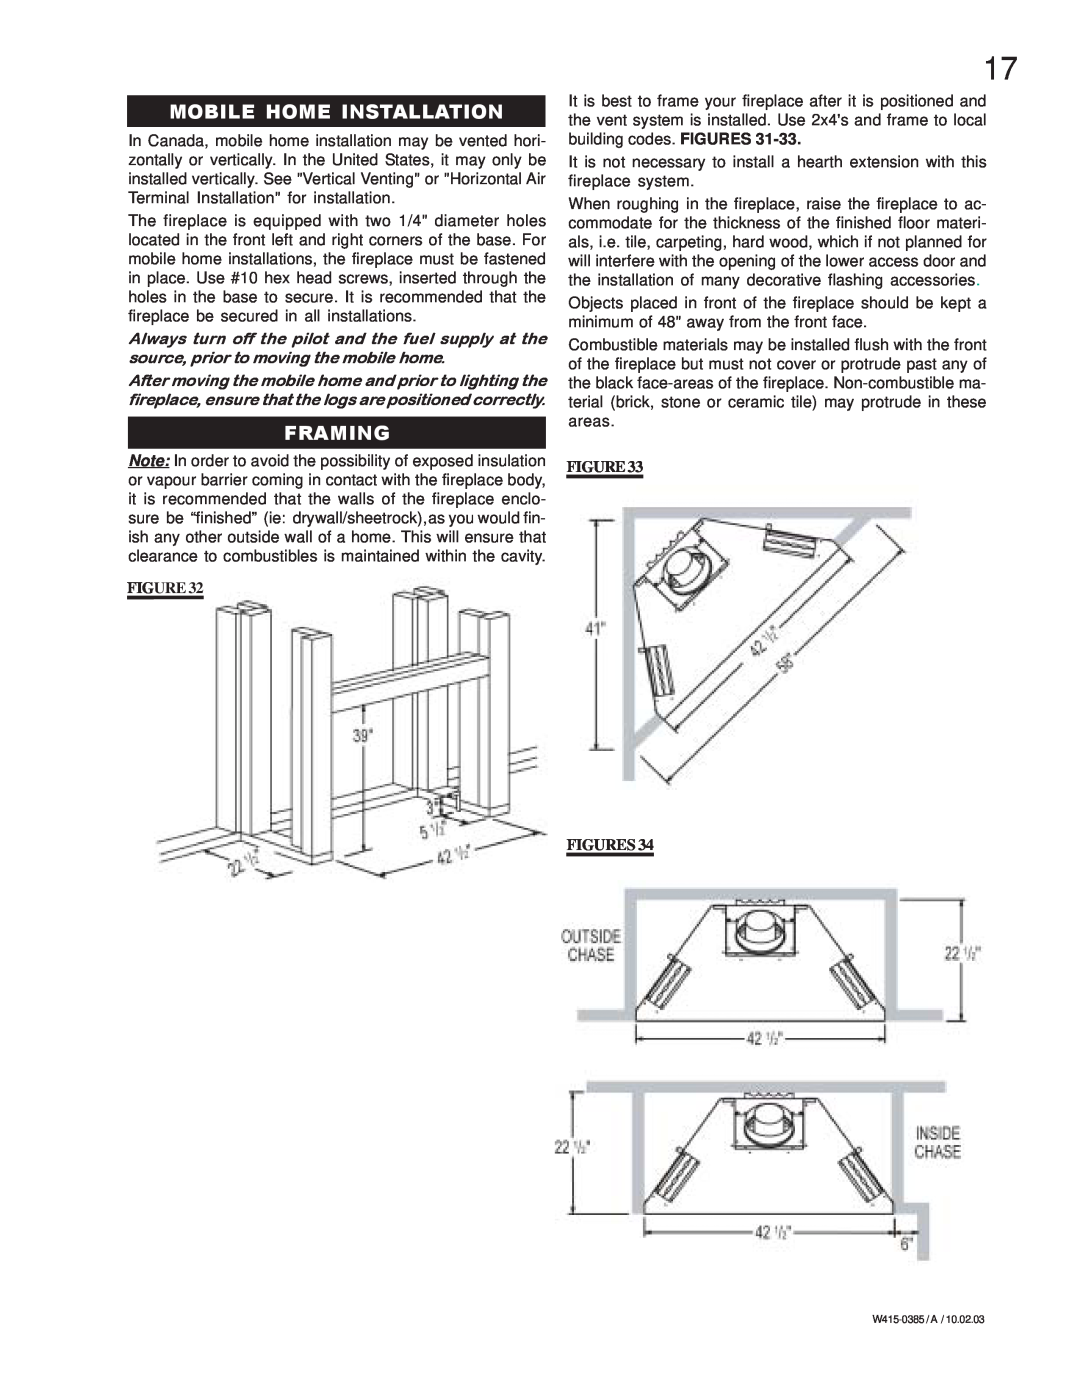 Continental BCDV42N, BCDV42P manual Mobile Home Installation, Framing, Figures 